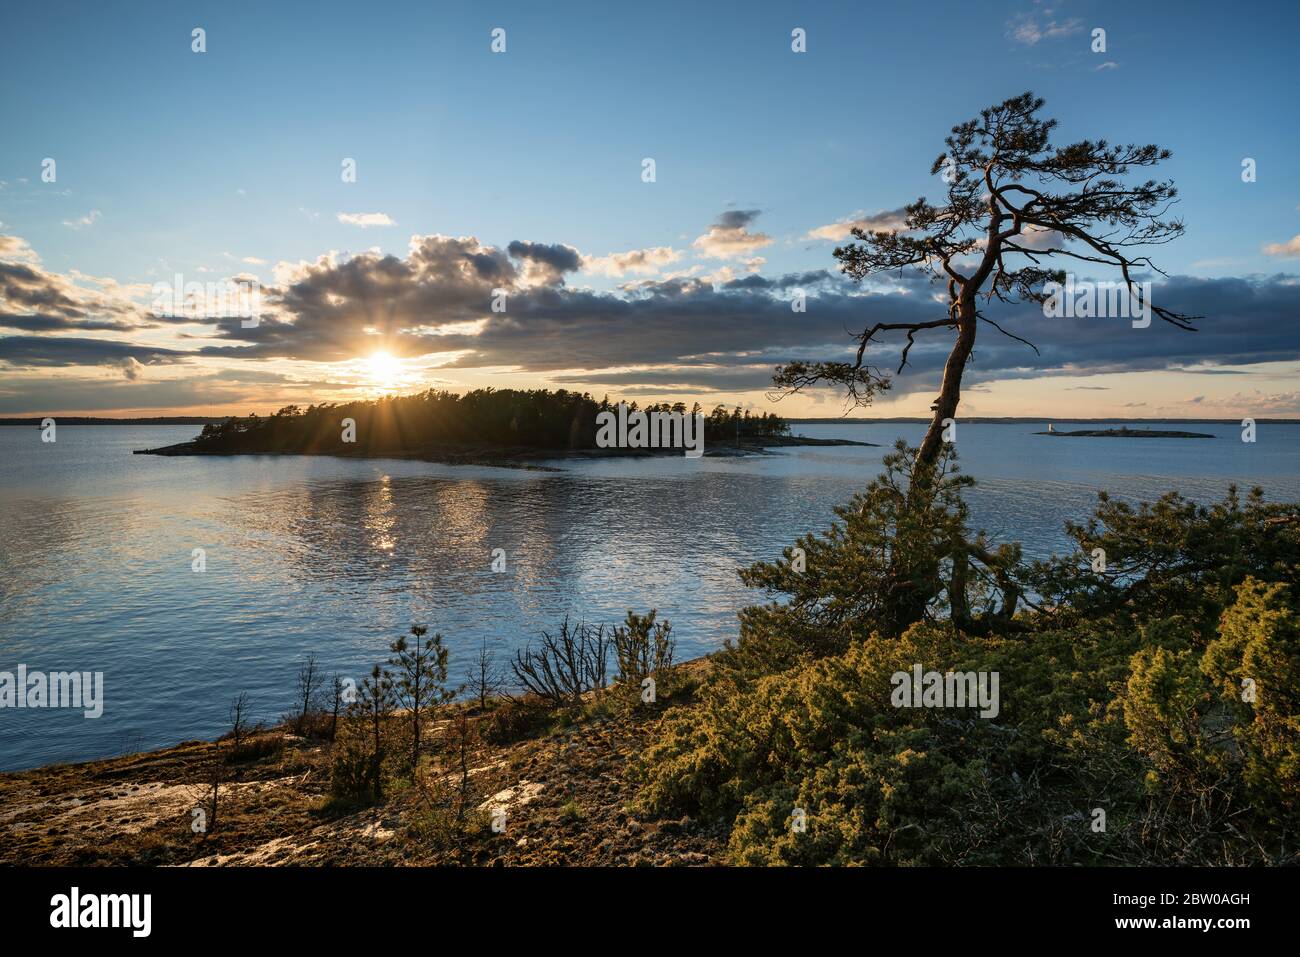 Evening at Bylandet island, Kirkkonummi, Finland Stock Photo